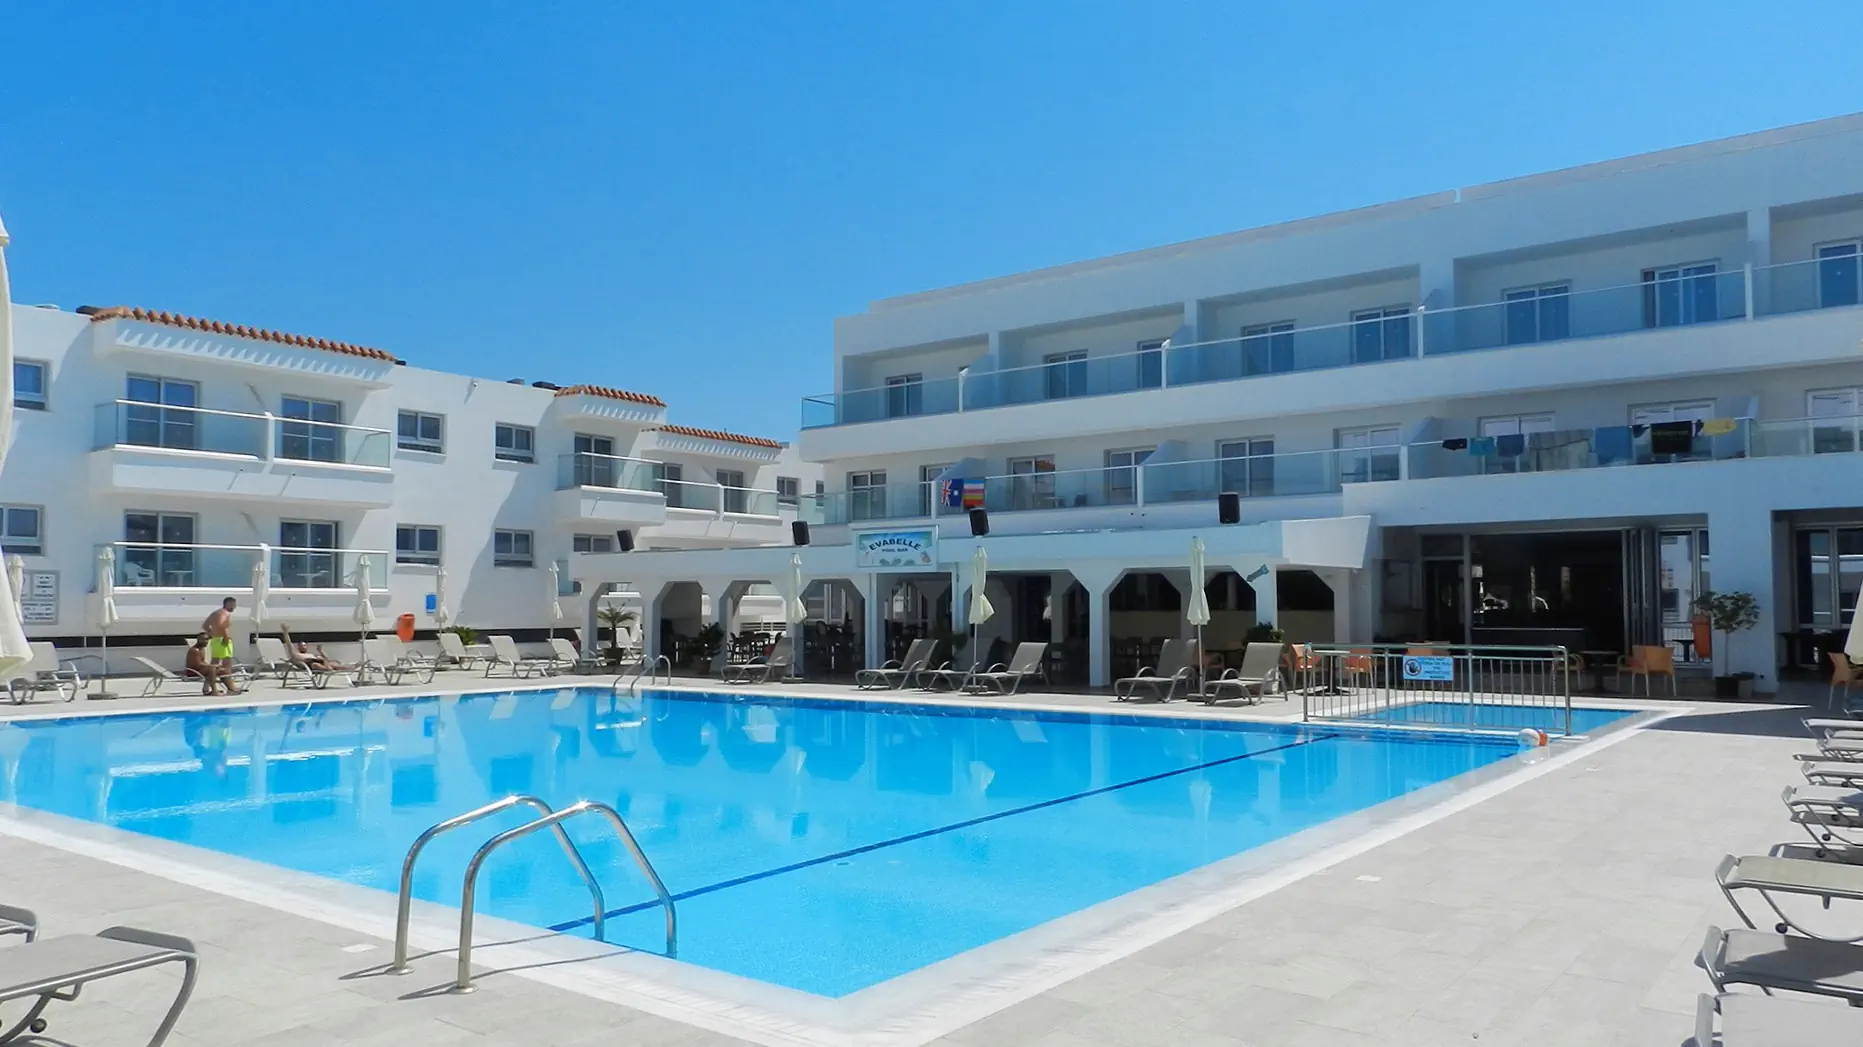 Cypr Ayia Napa Ajia Napa Evabelle Napa Hotel Apartments